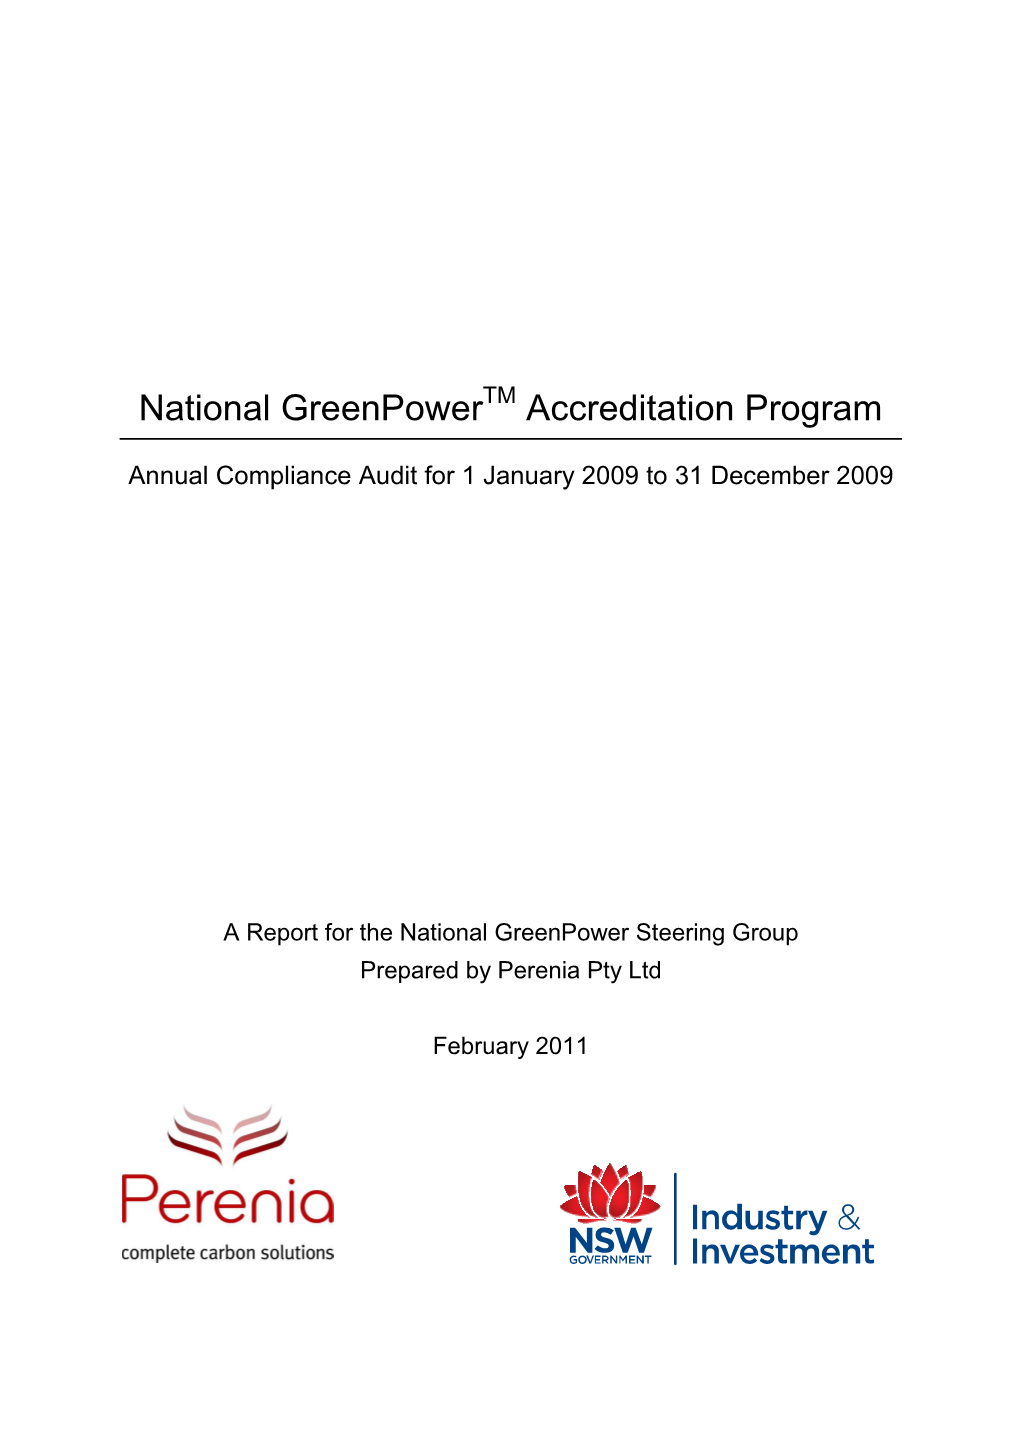 Greenpower 2009 Annual Audit Report FINAL.Pdf